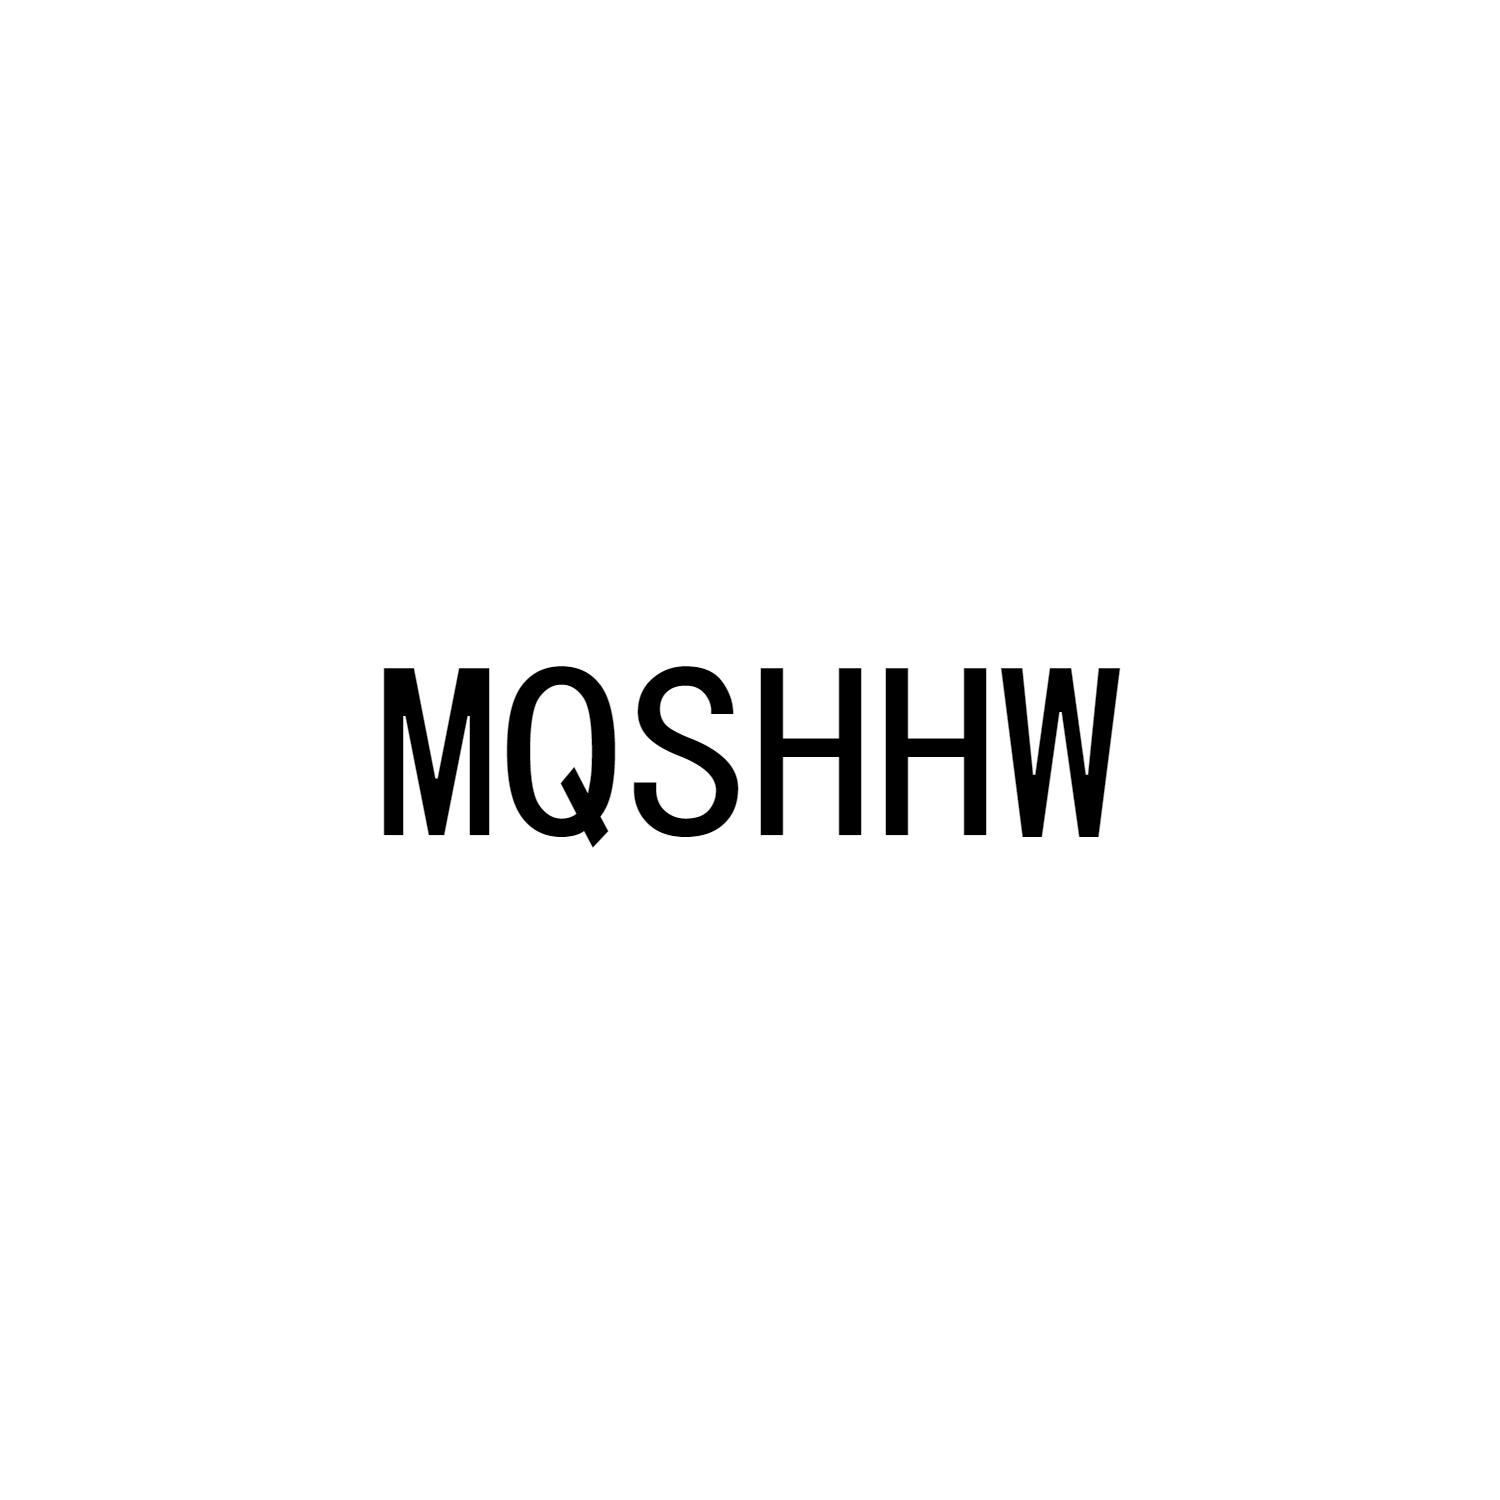 MQSHHW